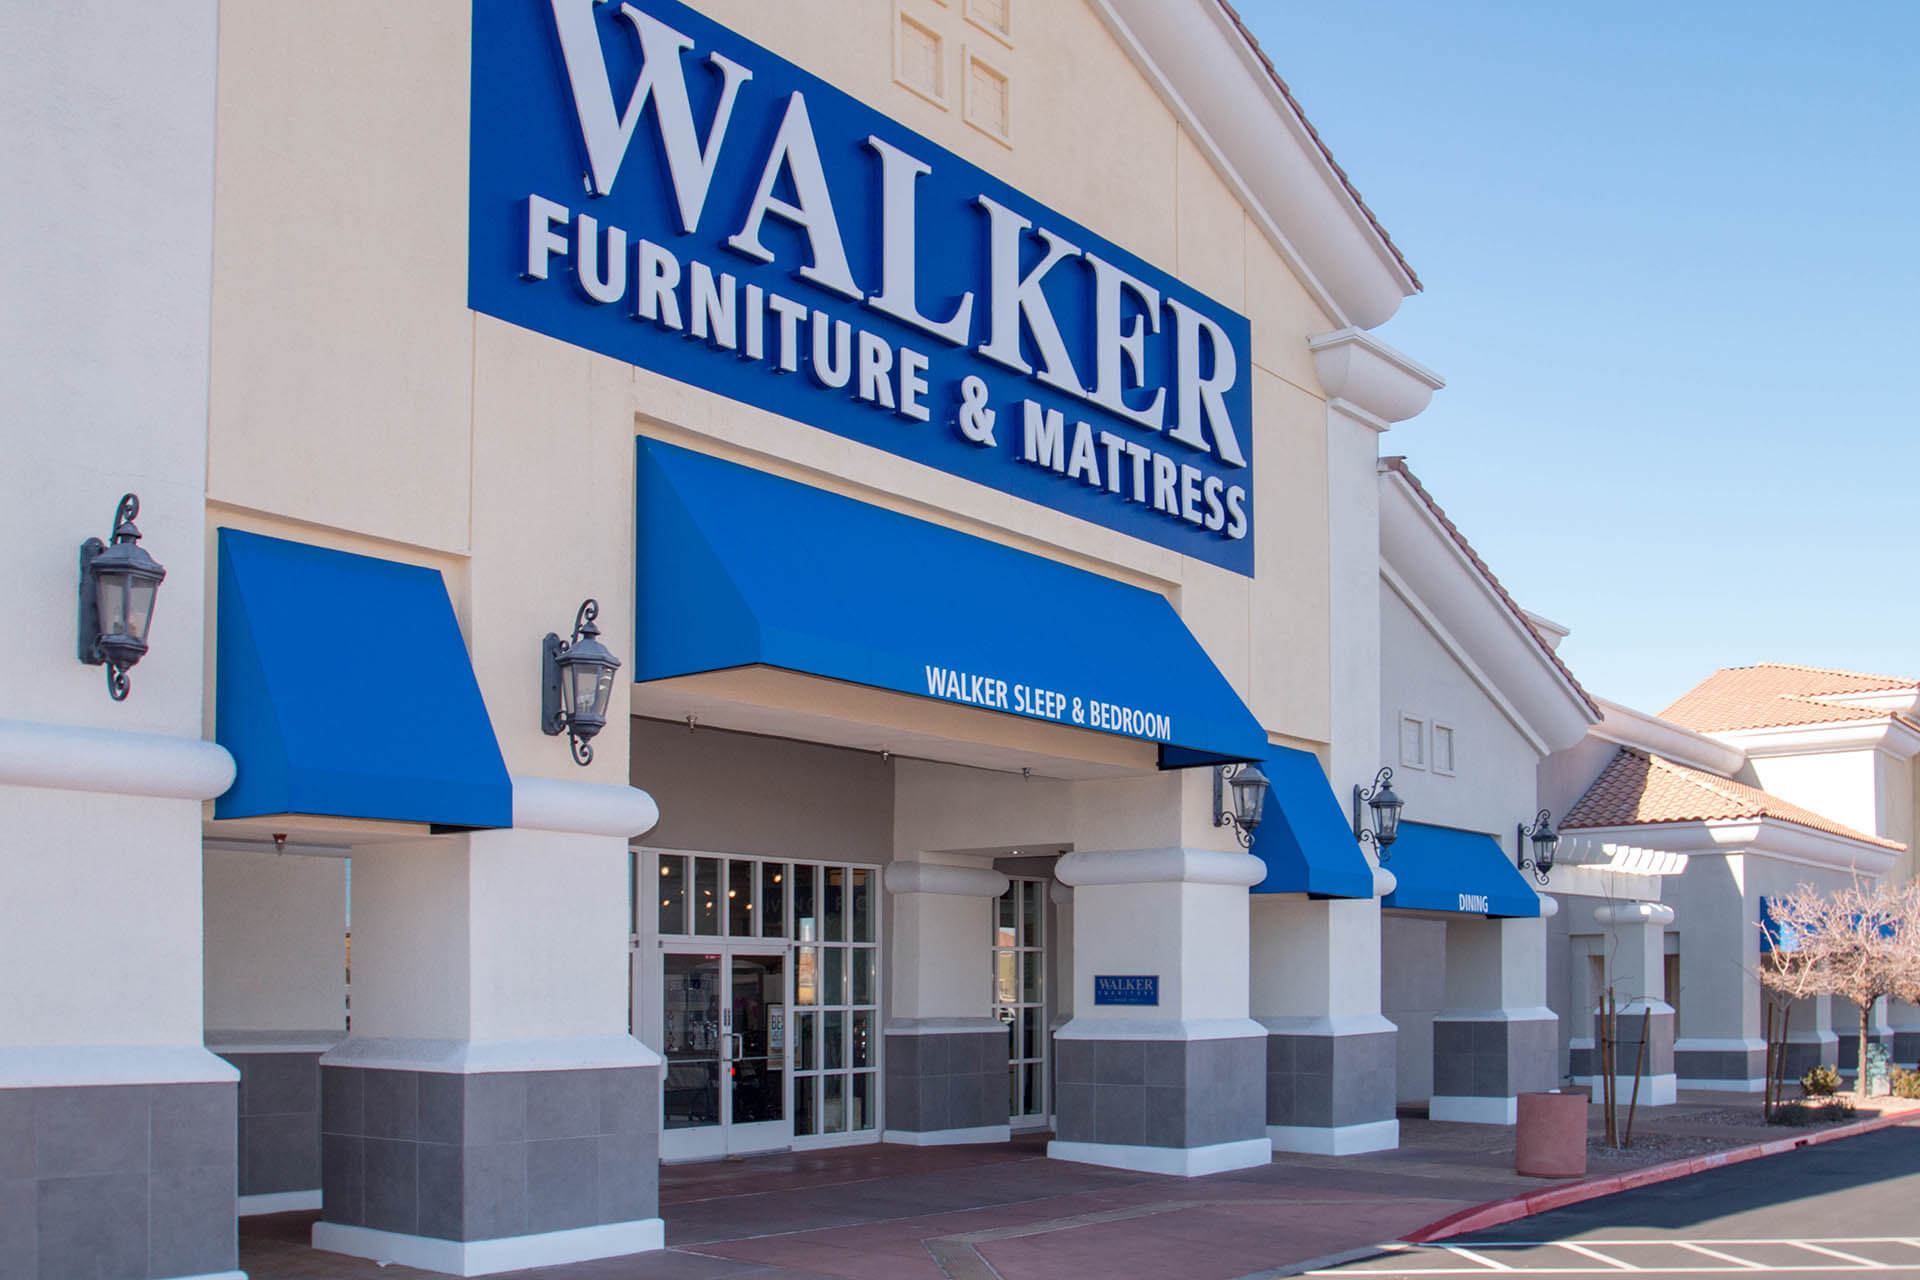 walker furniture & mattress las vegas